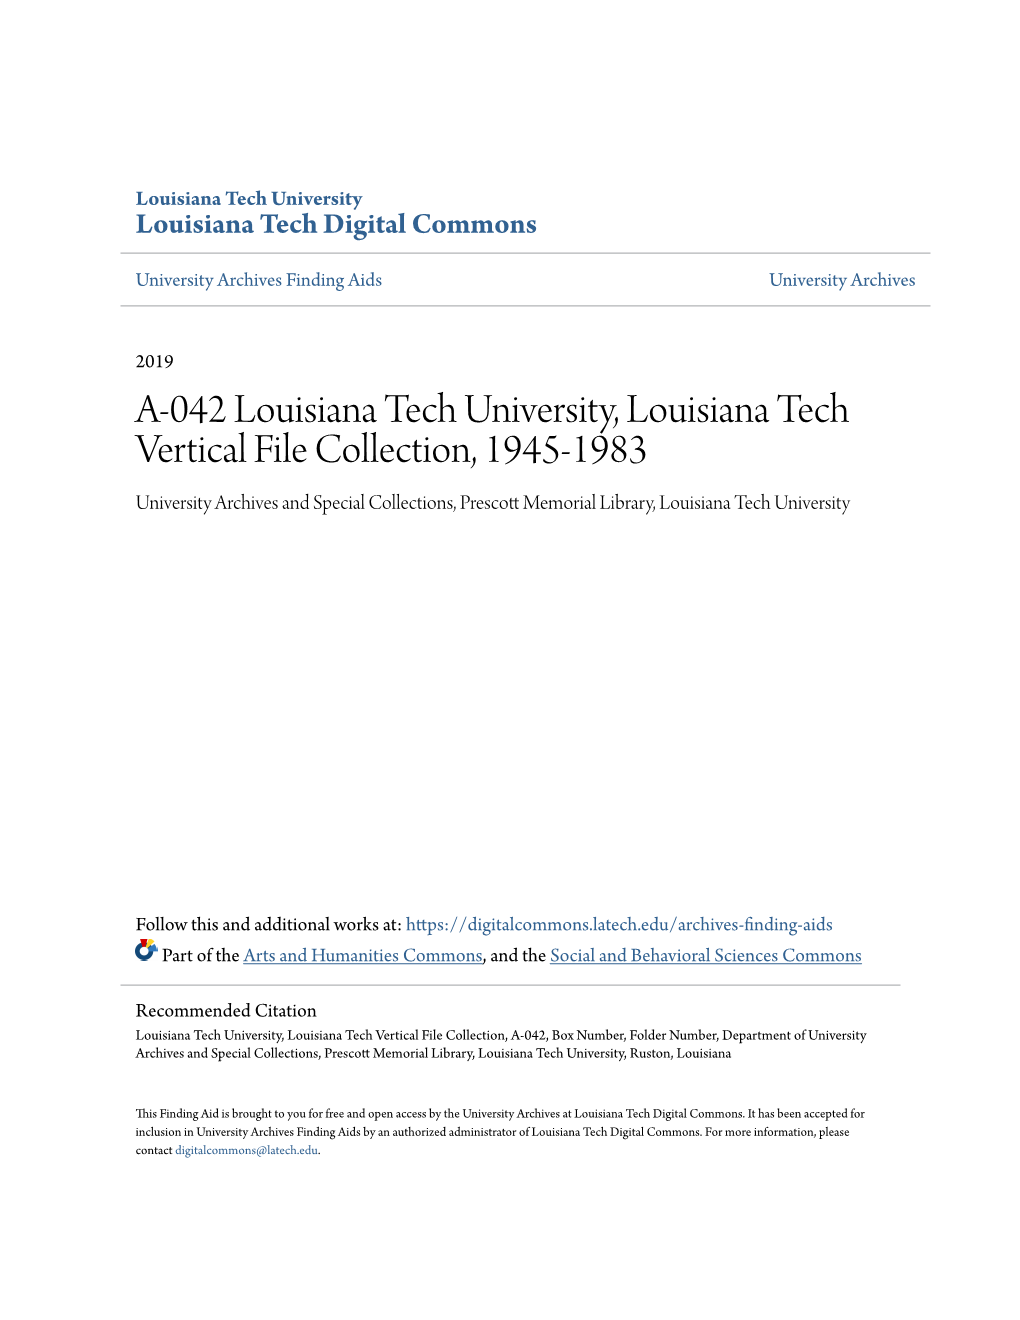 A-042 Louisiana Tech University, Louisiana Tech Vertical File